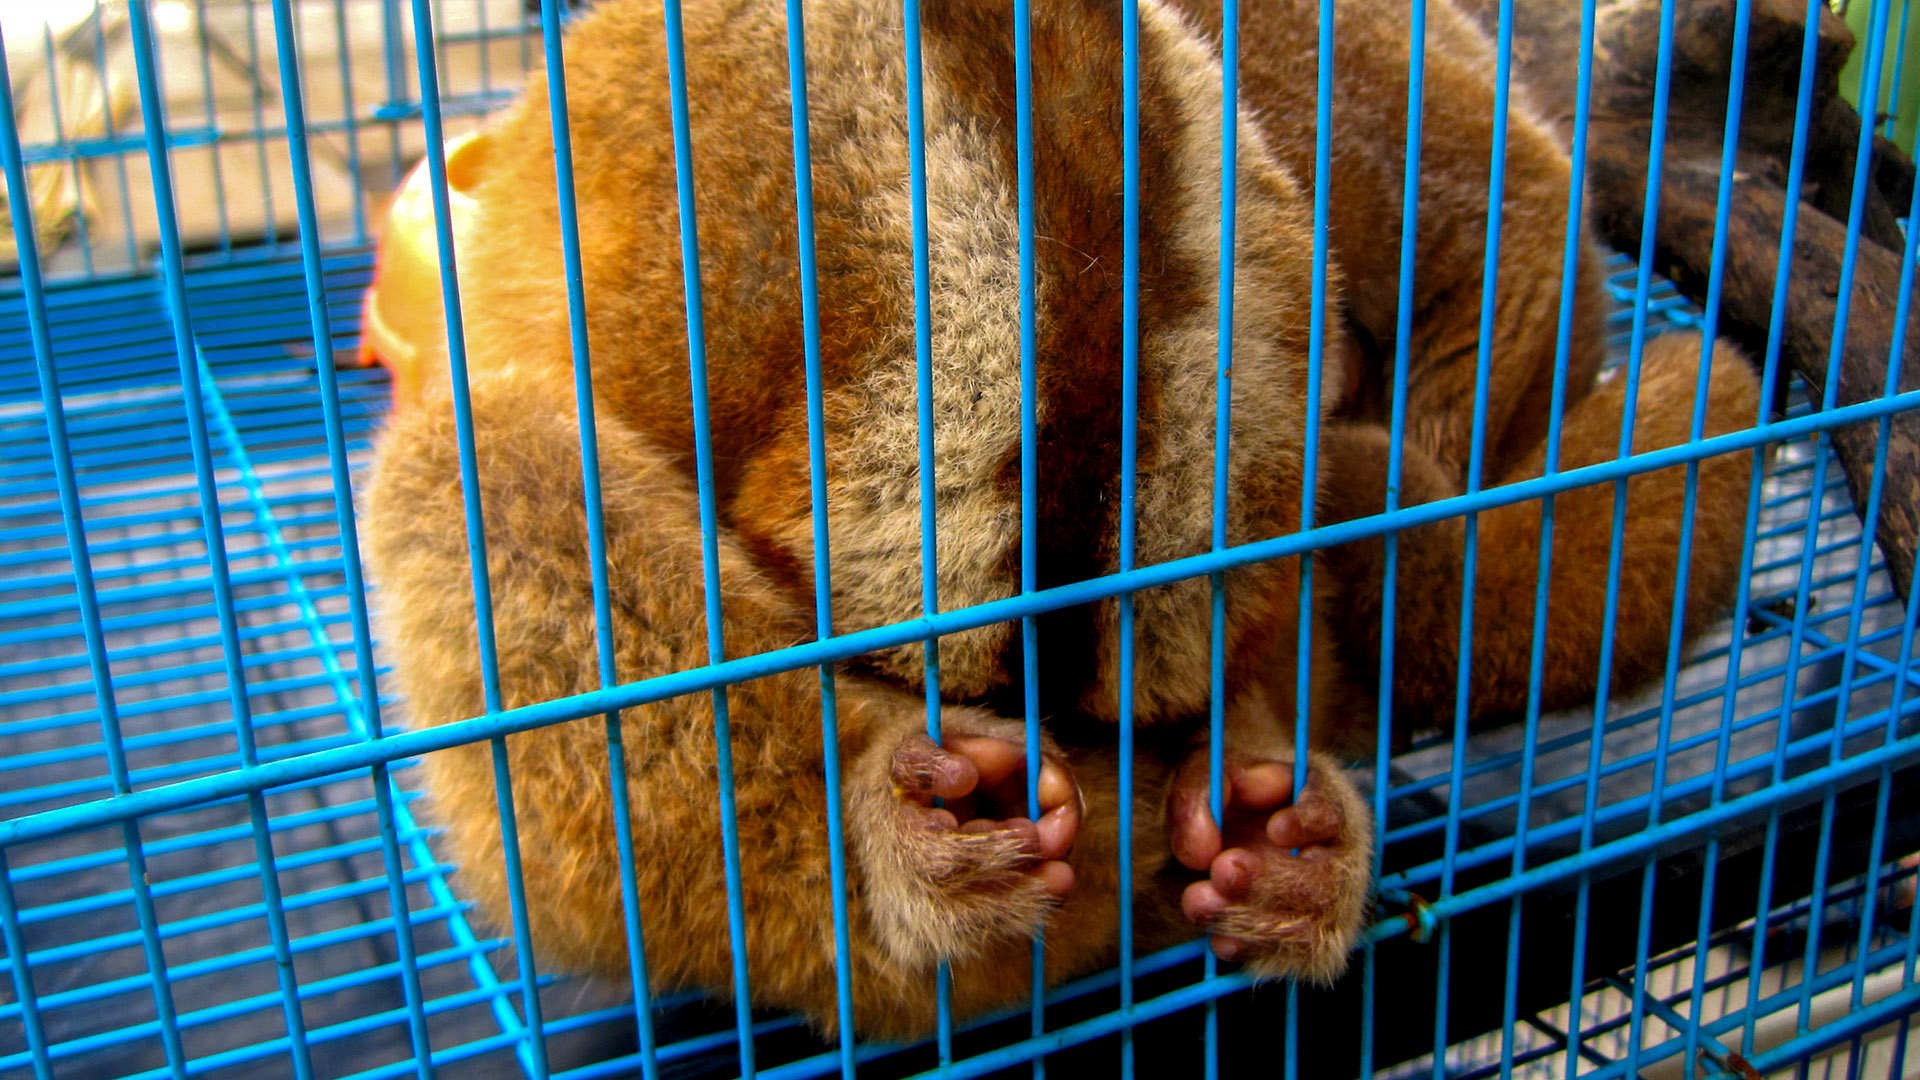 Slow loris held captive in cage